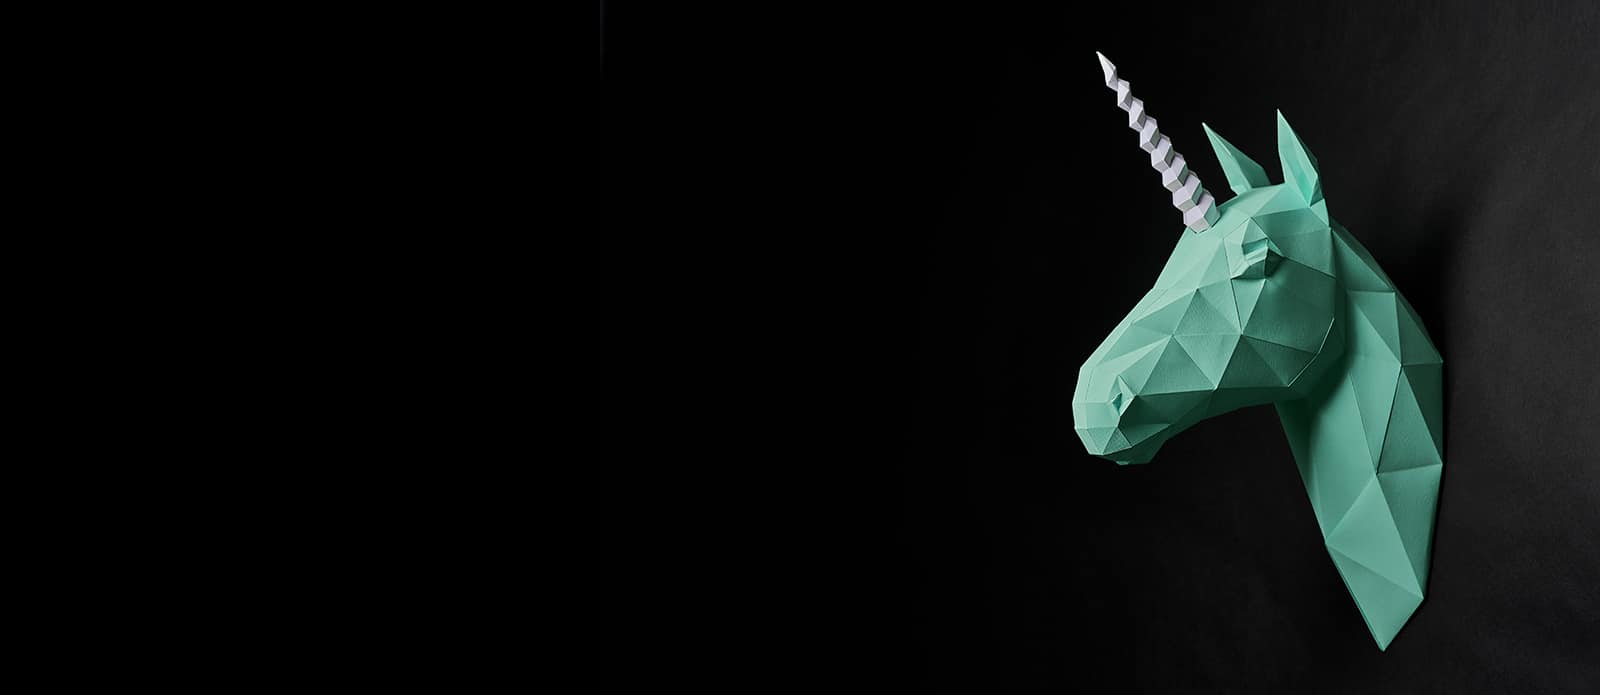 Origami Dull Green Unicorn's Head Hanging On Black Wall.